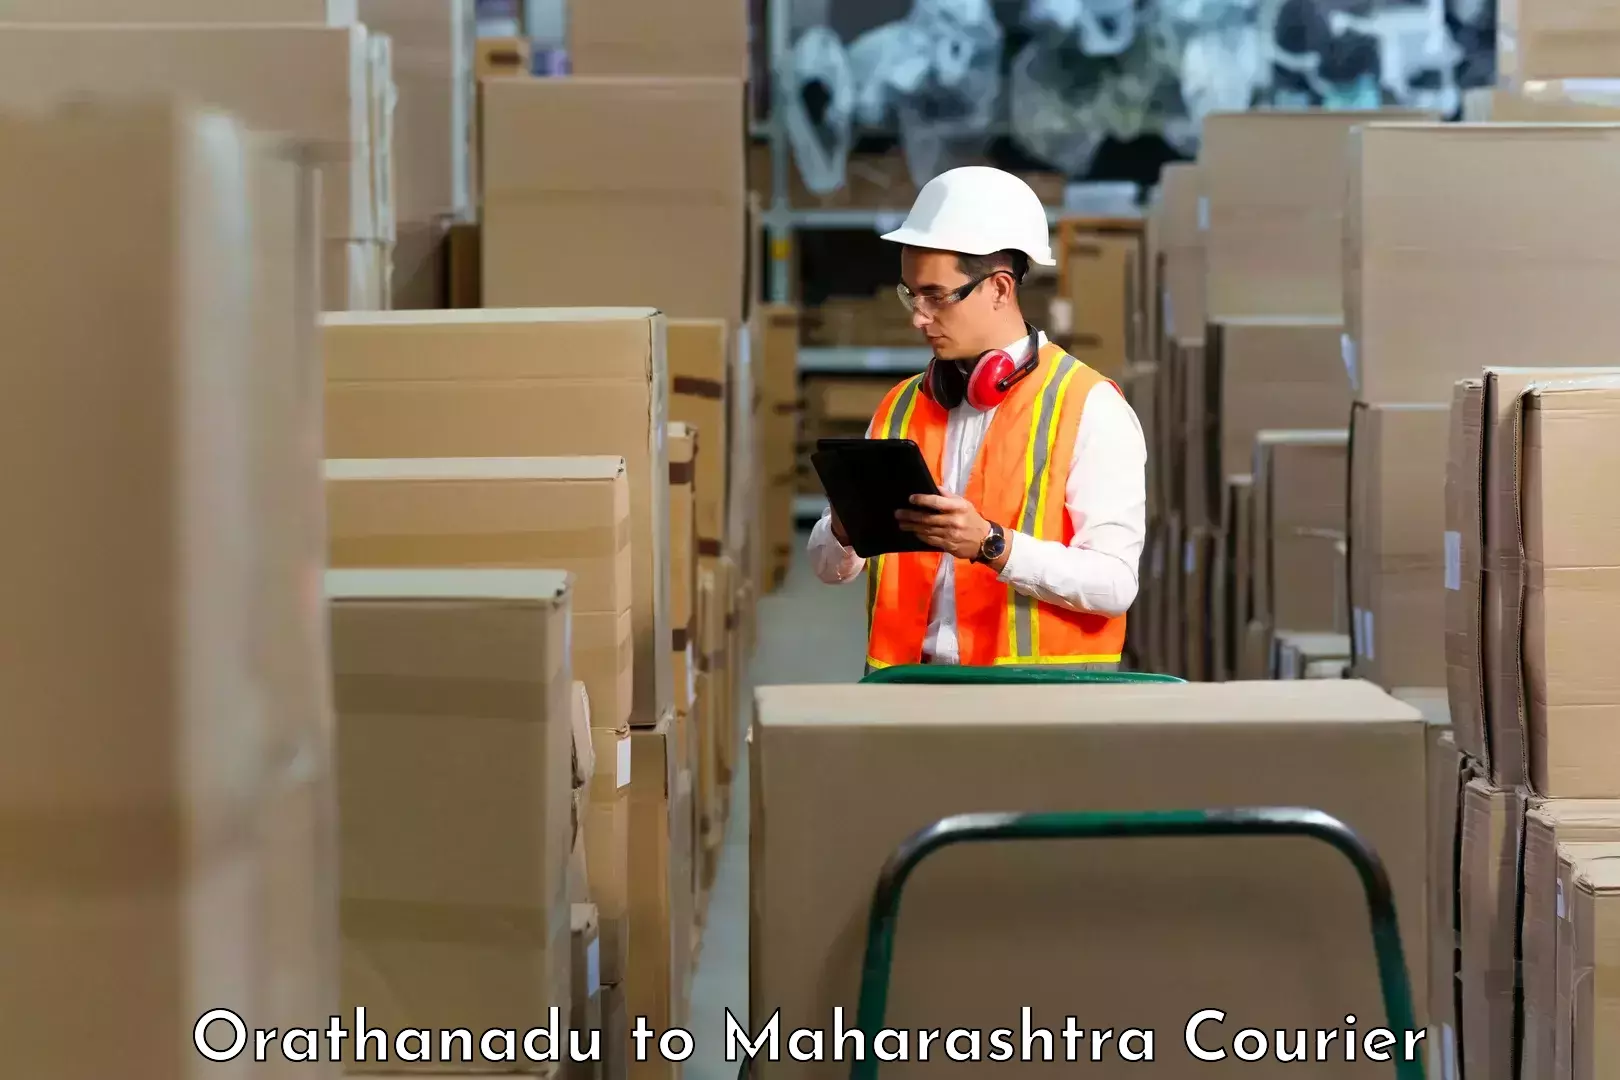 Nationwide courier service Orathanadu to Maharashtra